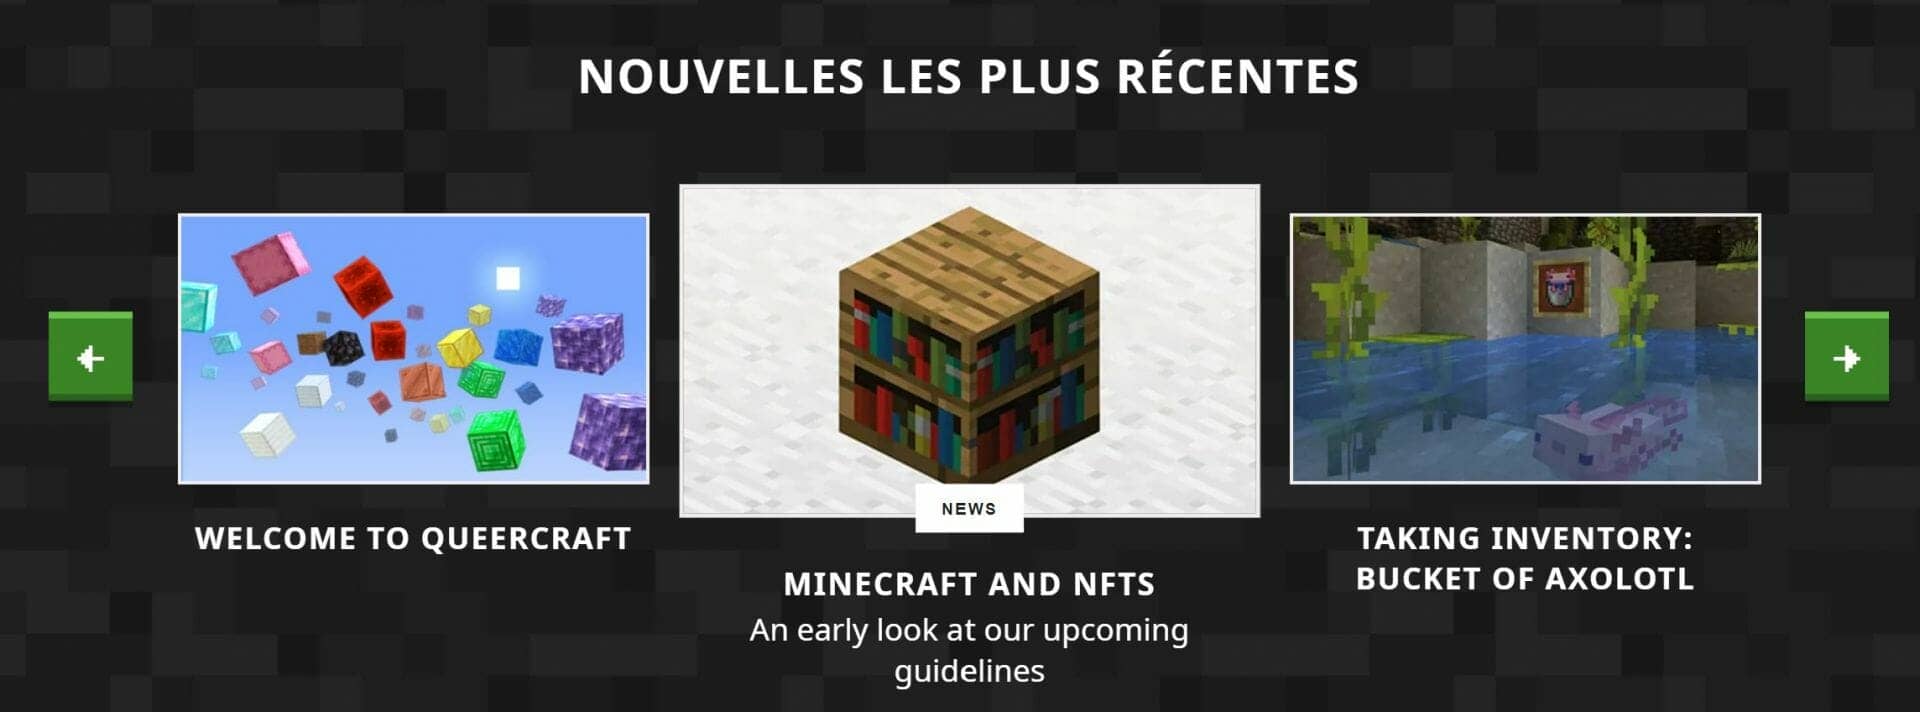 Capture d'écran du blog de Minecraft